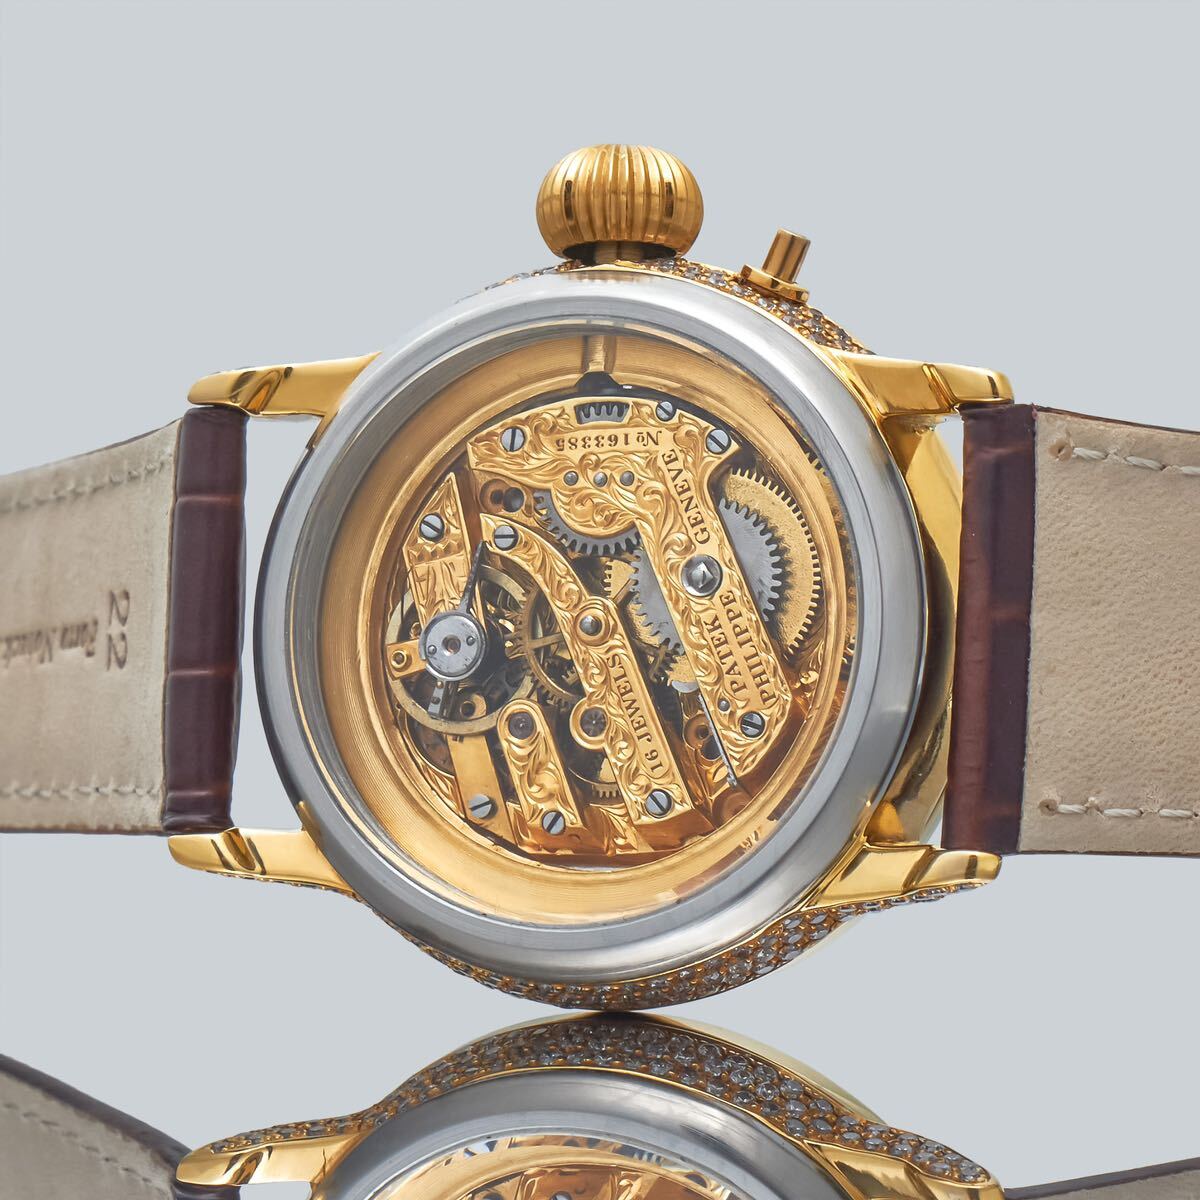 Marriage Watch Patek Philippe 40mm Men's Watch With A Pocket Watch Manual Winding Skeleton